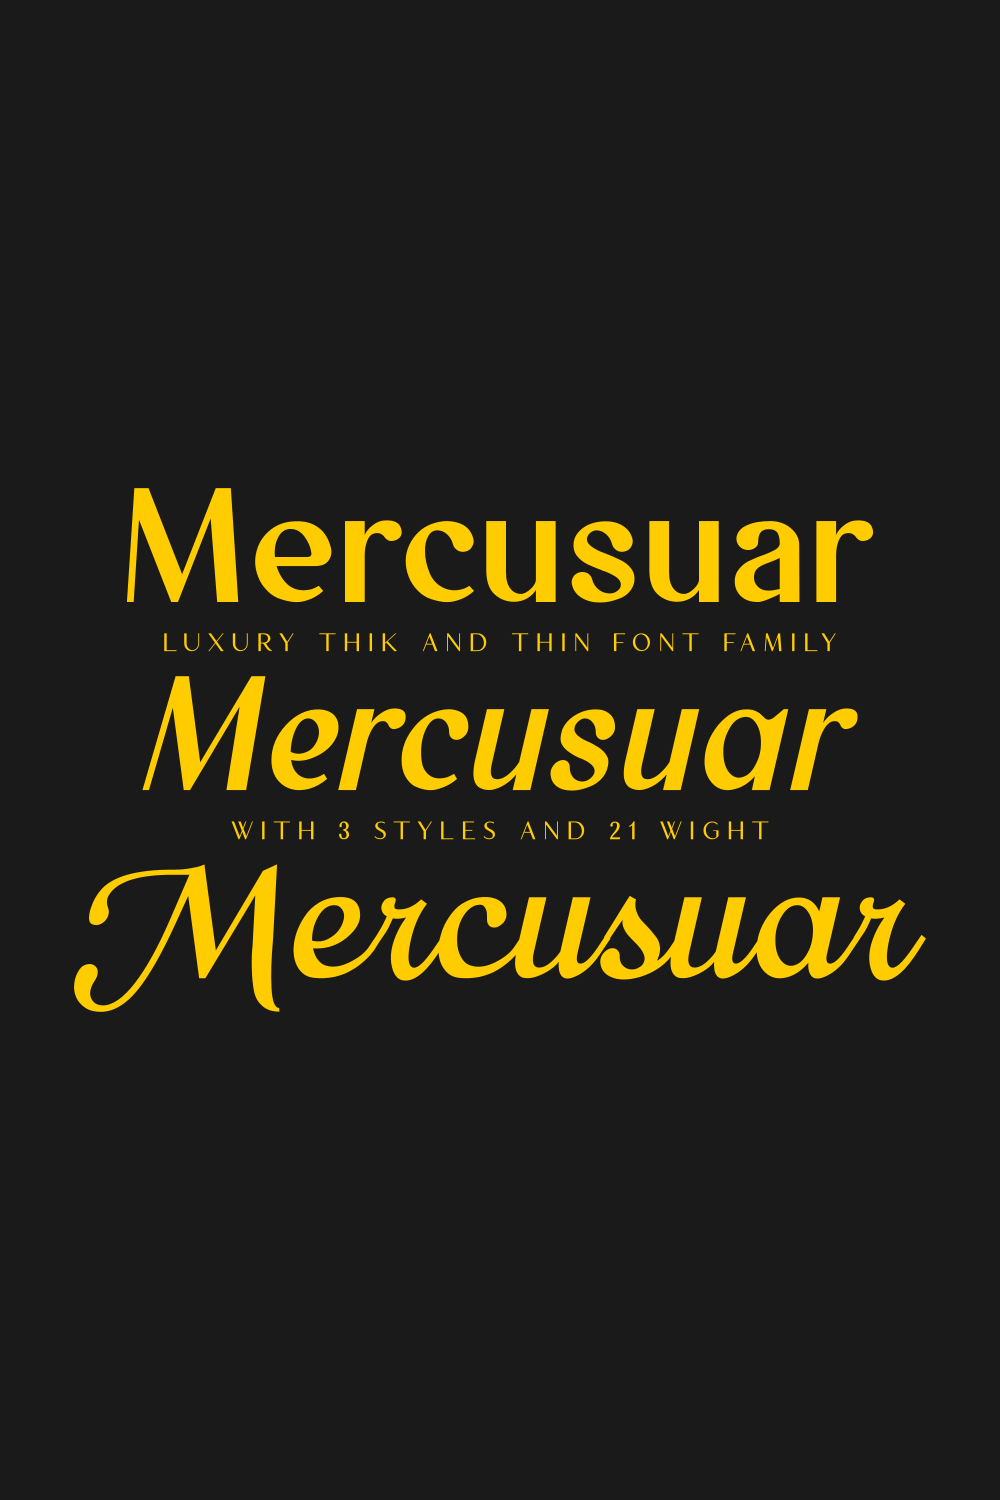 Mercusuar - Luxury Font Family pinterest preview image.